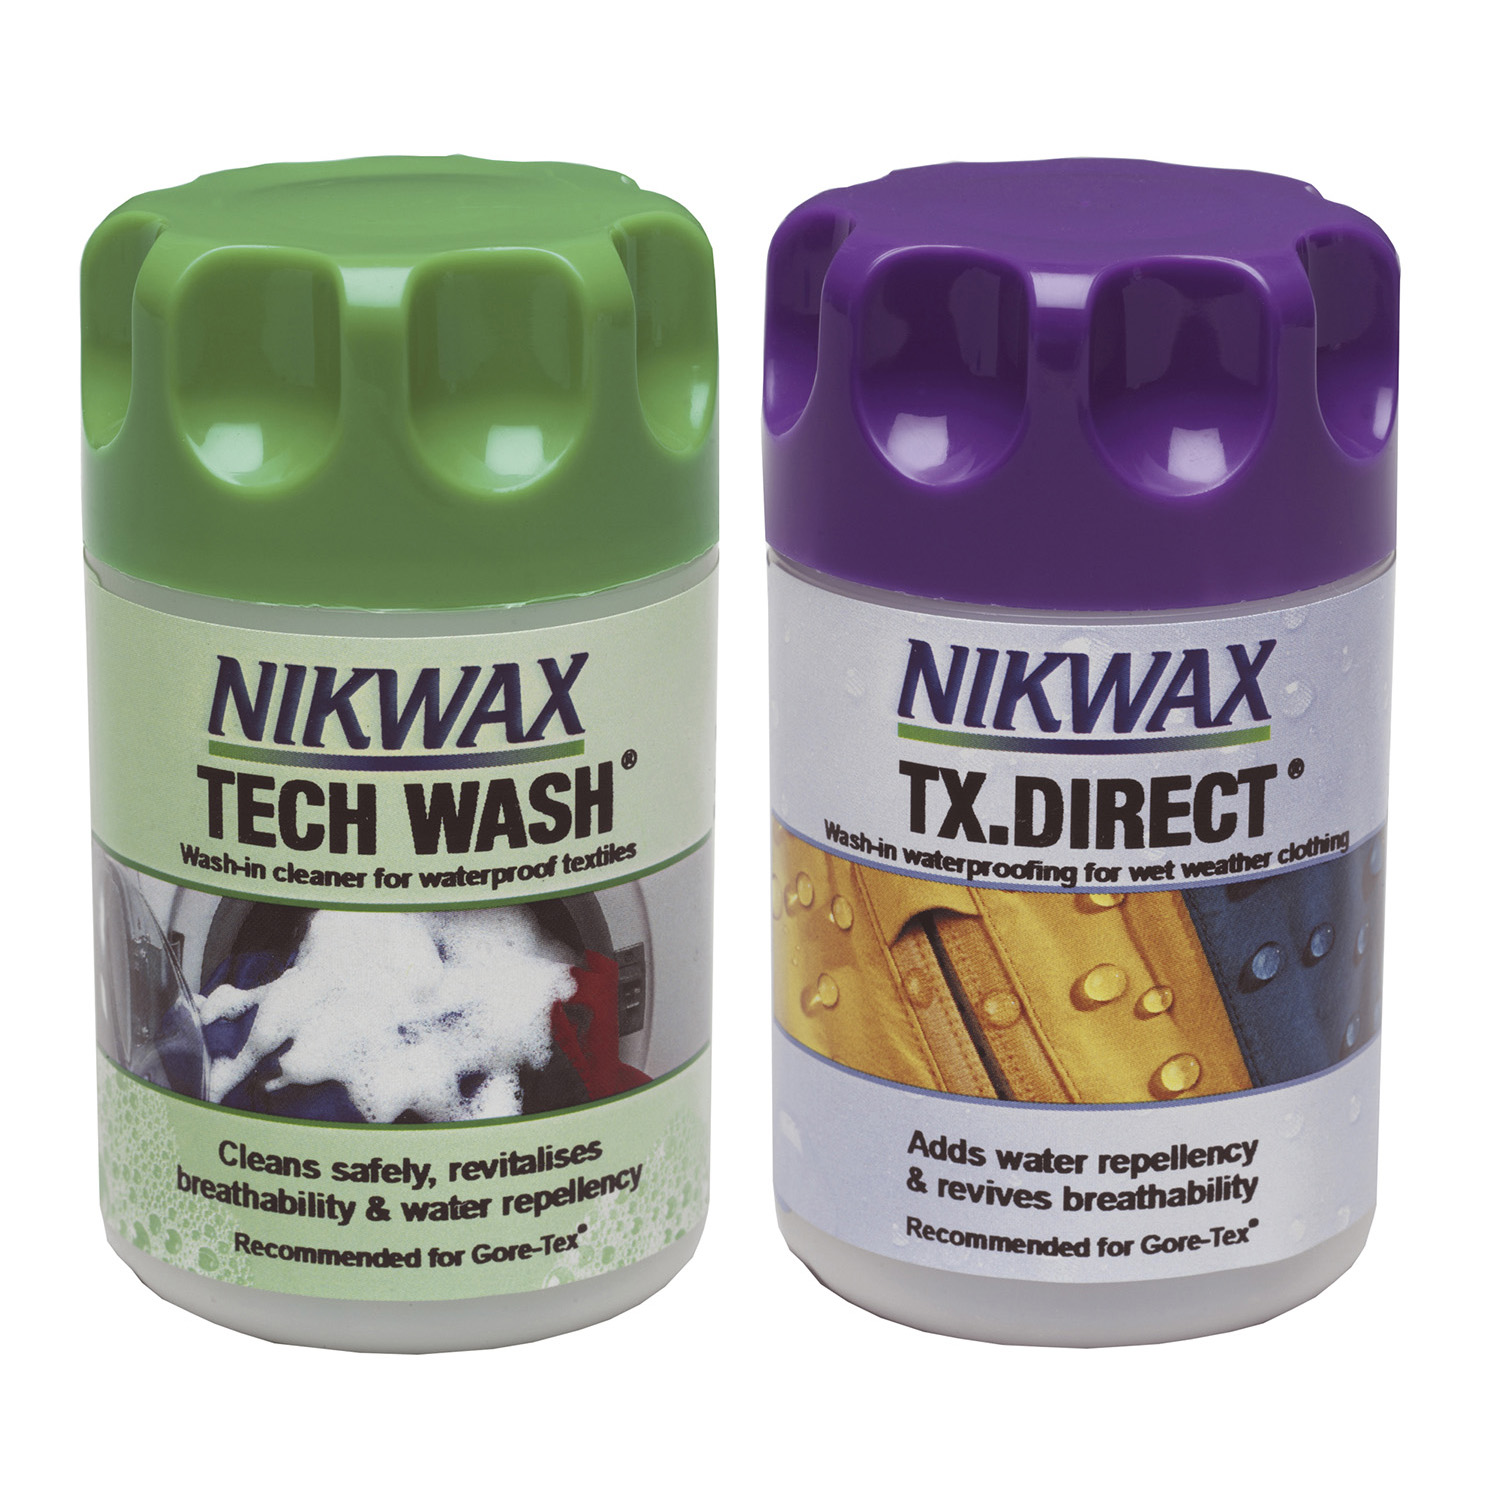 NIKWAX TECH WASH/TX DIRECT WASH-IN TWIN PACK MINI MINI MINI X TWIN PACK